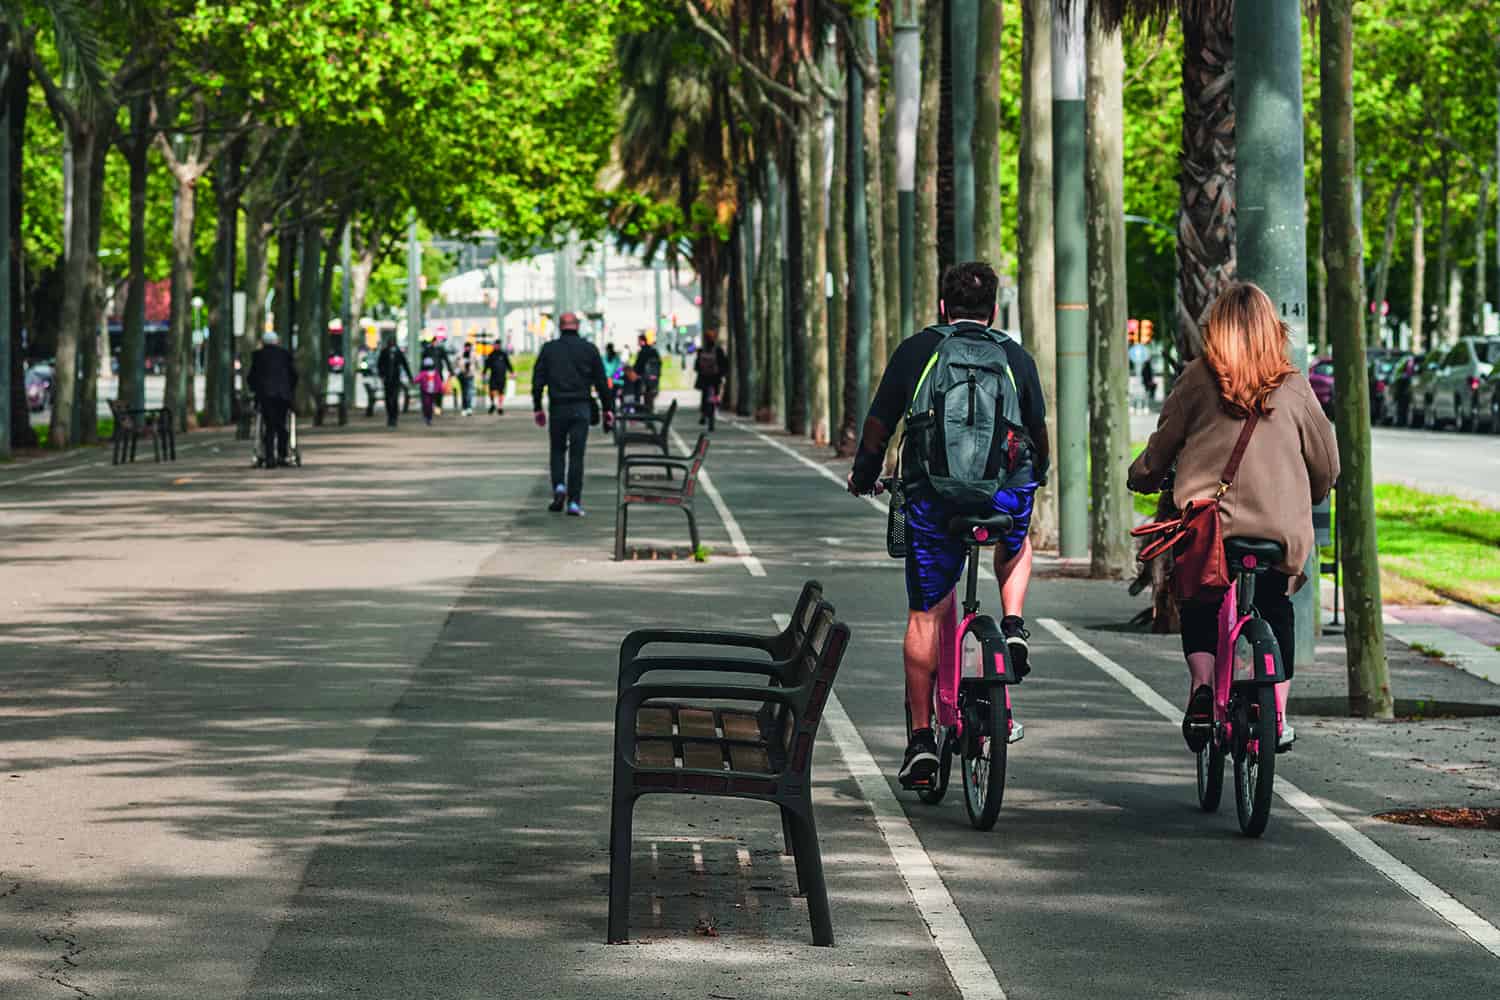 Cyclists on cycle lane alongside wide tree-lined pedestrian path.